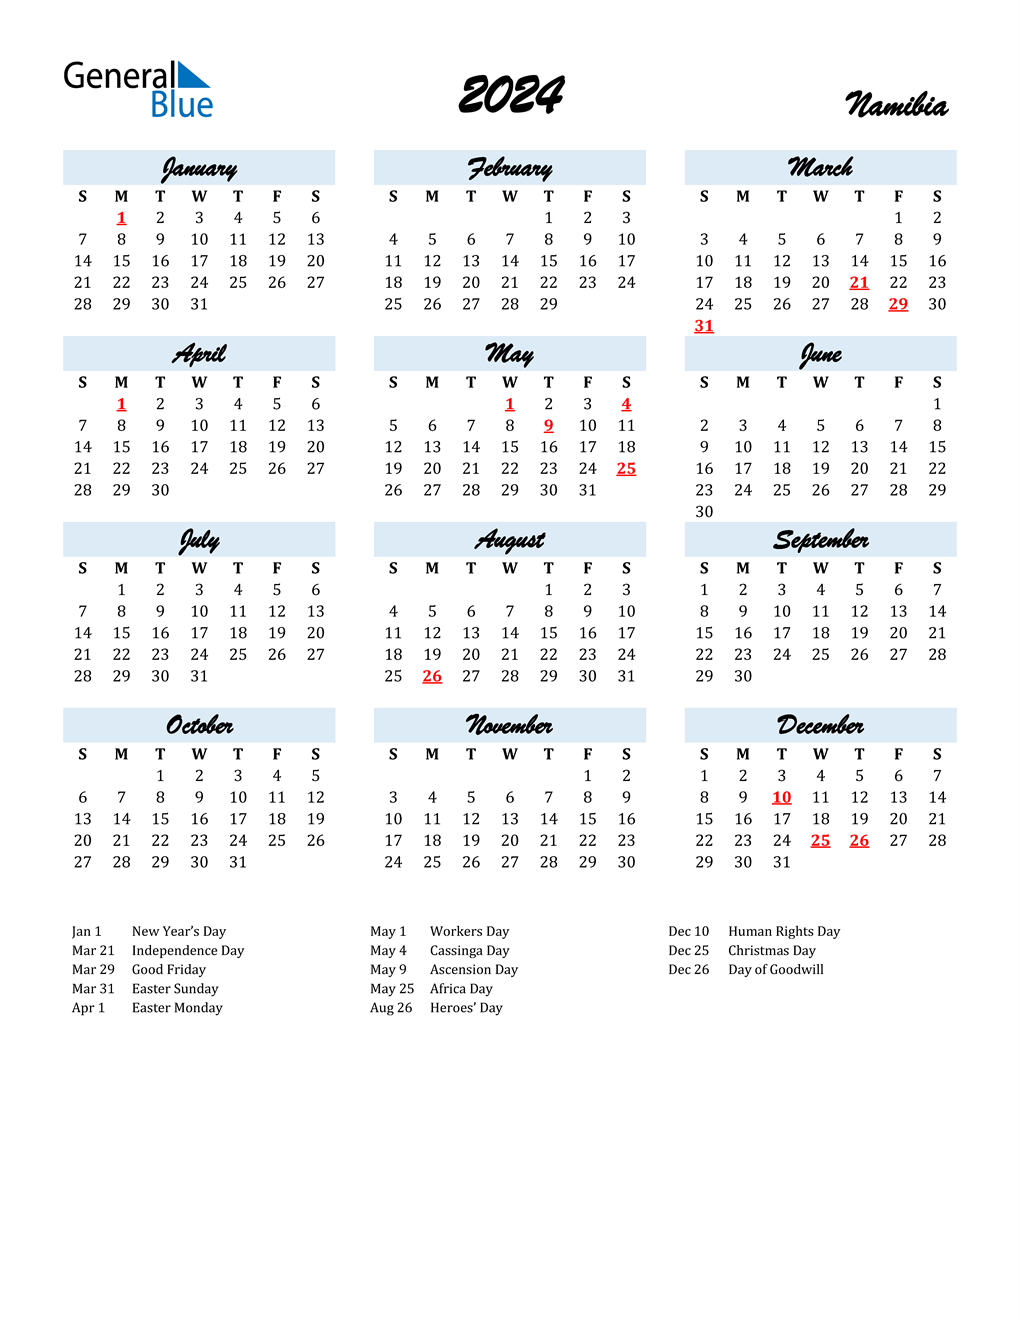 Calendar 2024 Printable South Africa Calendar 2024 All Holidays - Free Printable 2024 Calendar With Public Holidays South Africa